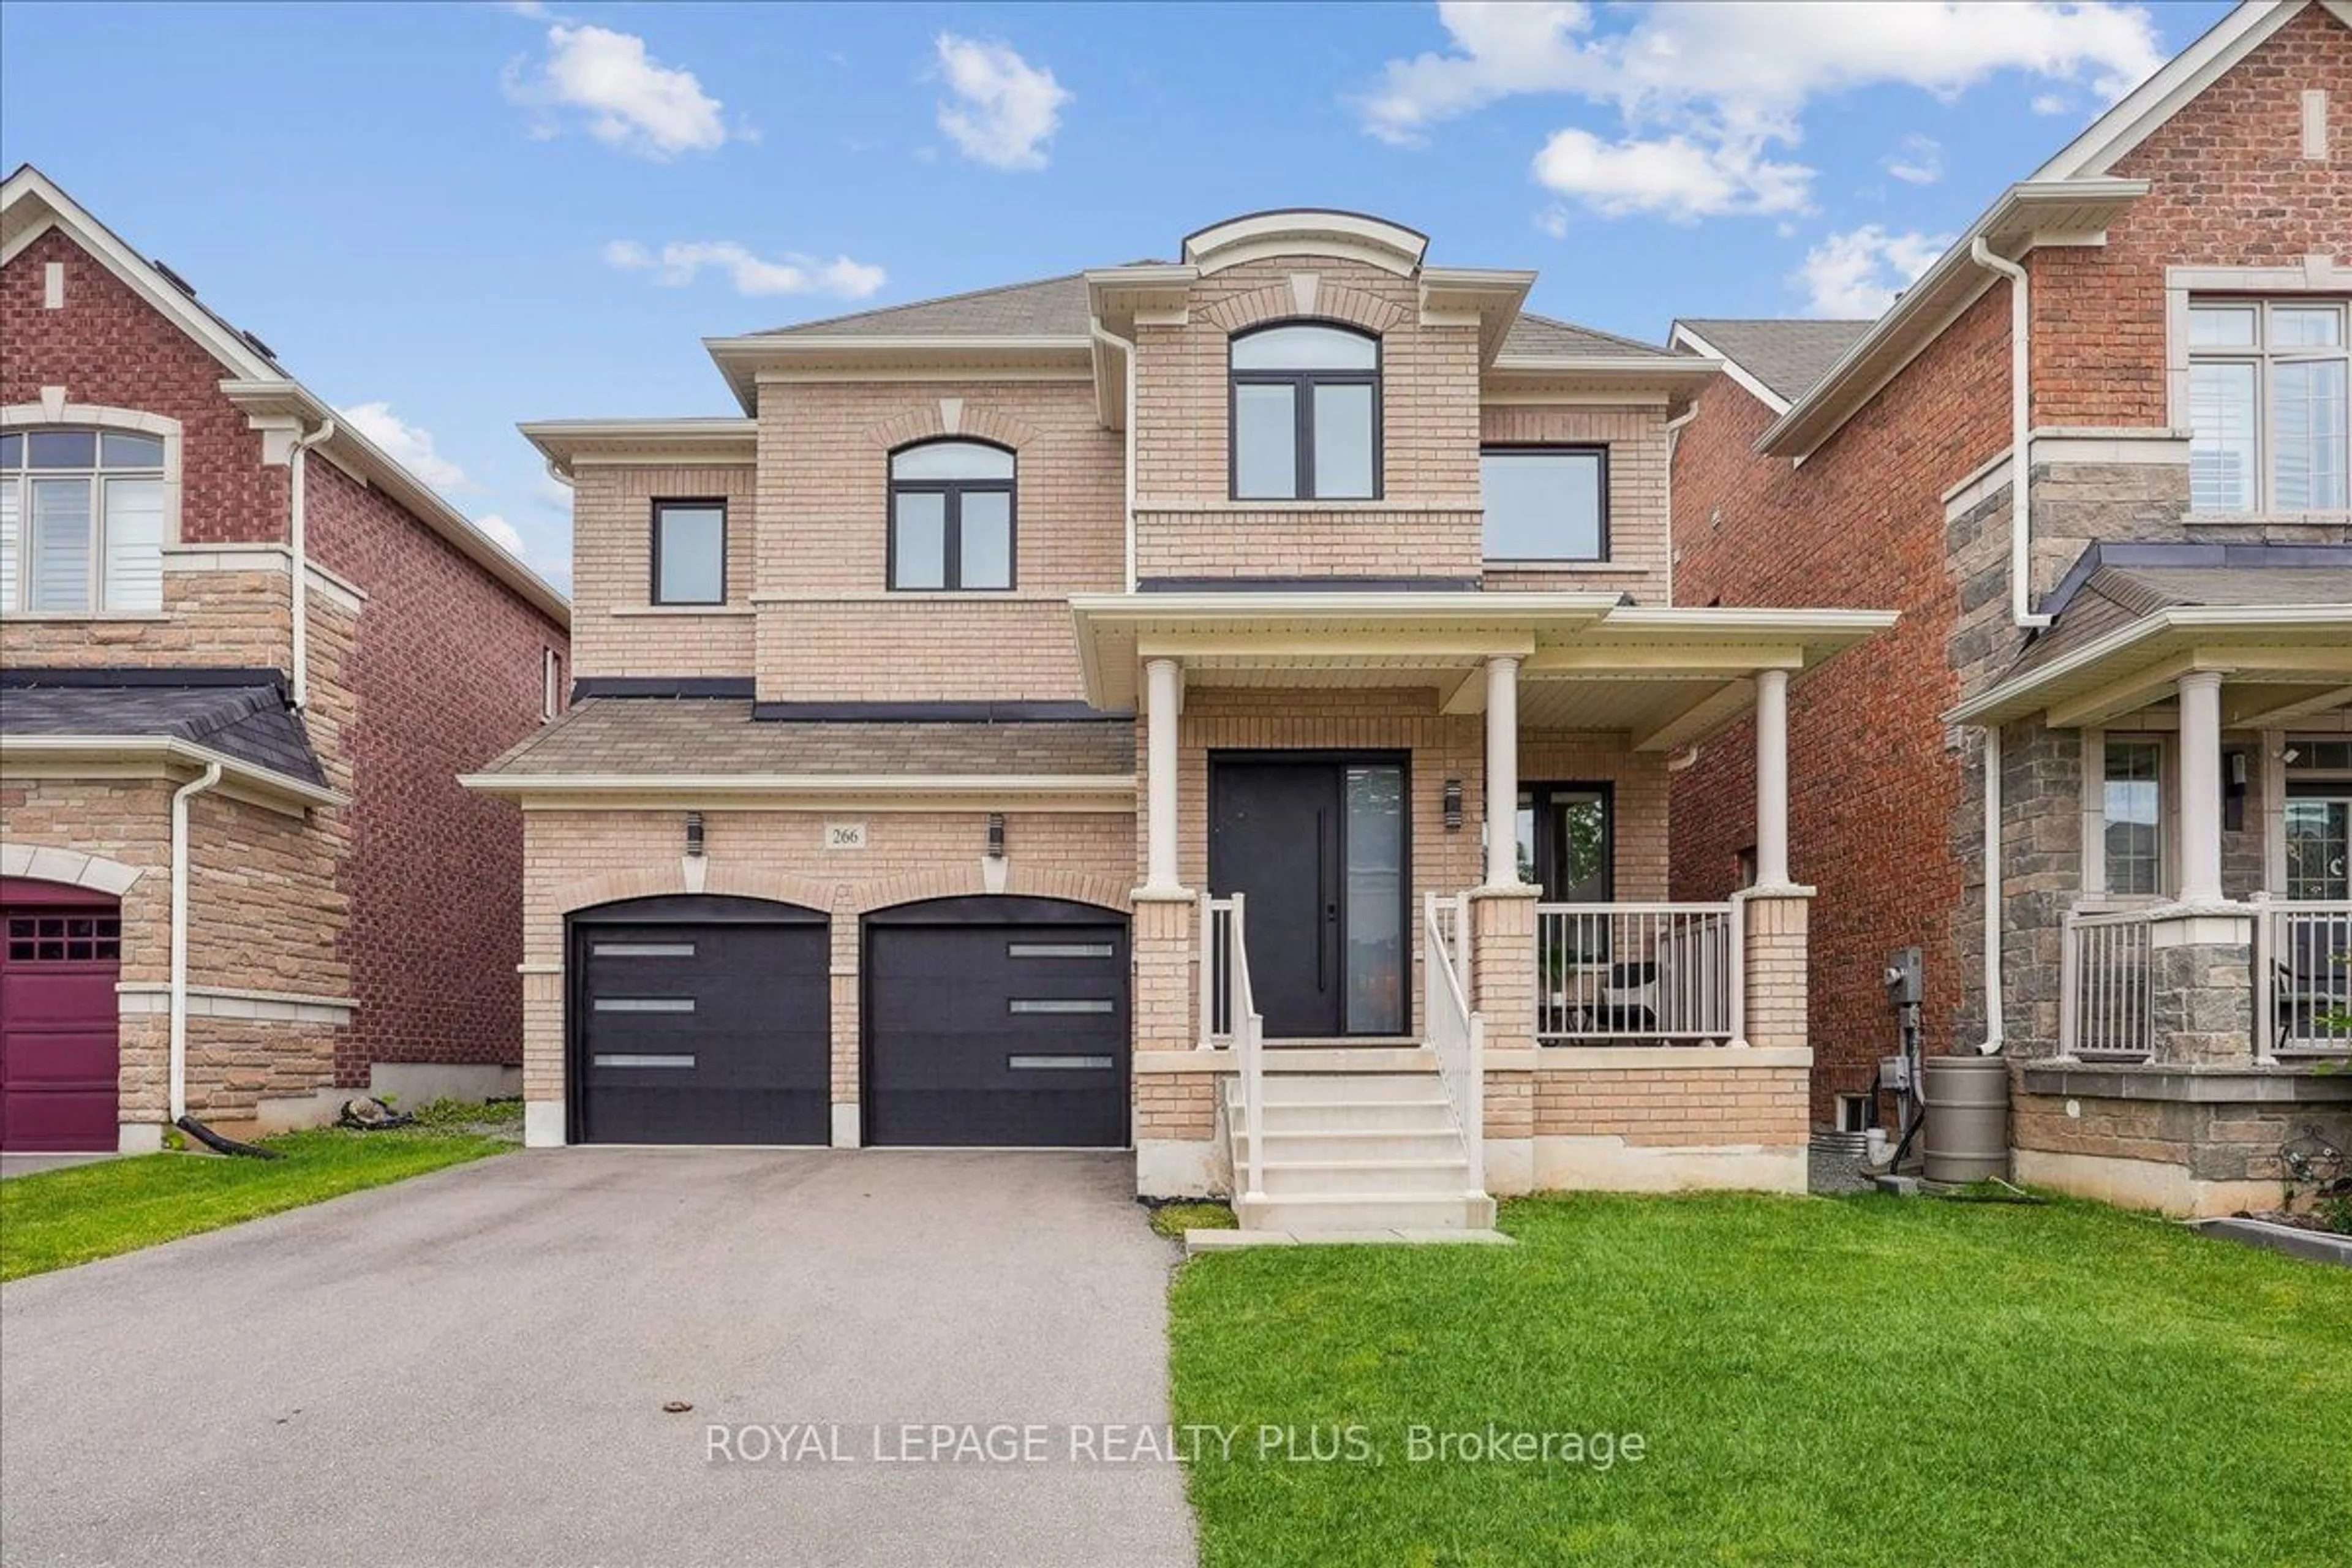 Home with brick exterior material for 266 Humphrey St, Hamilton Ontario L8B 1X4